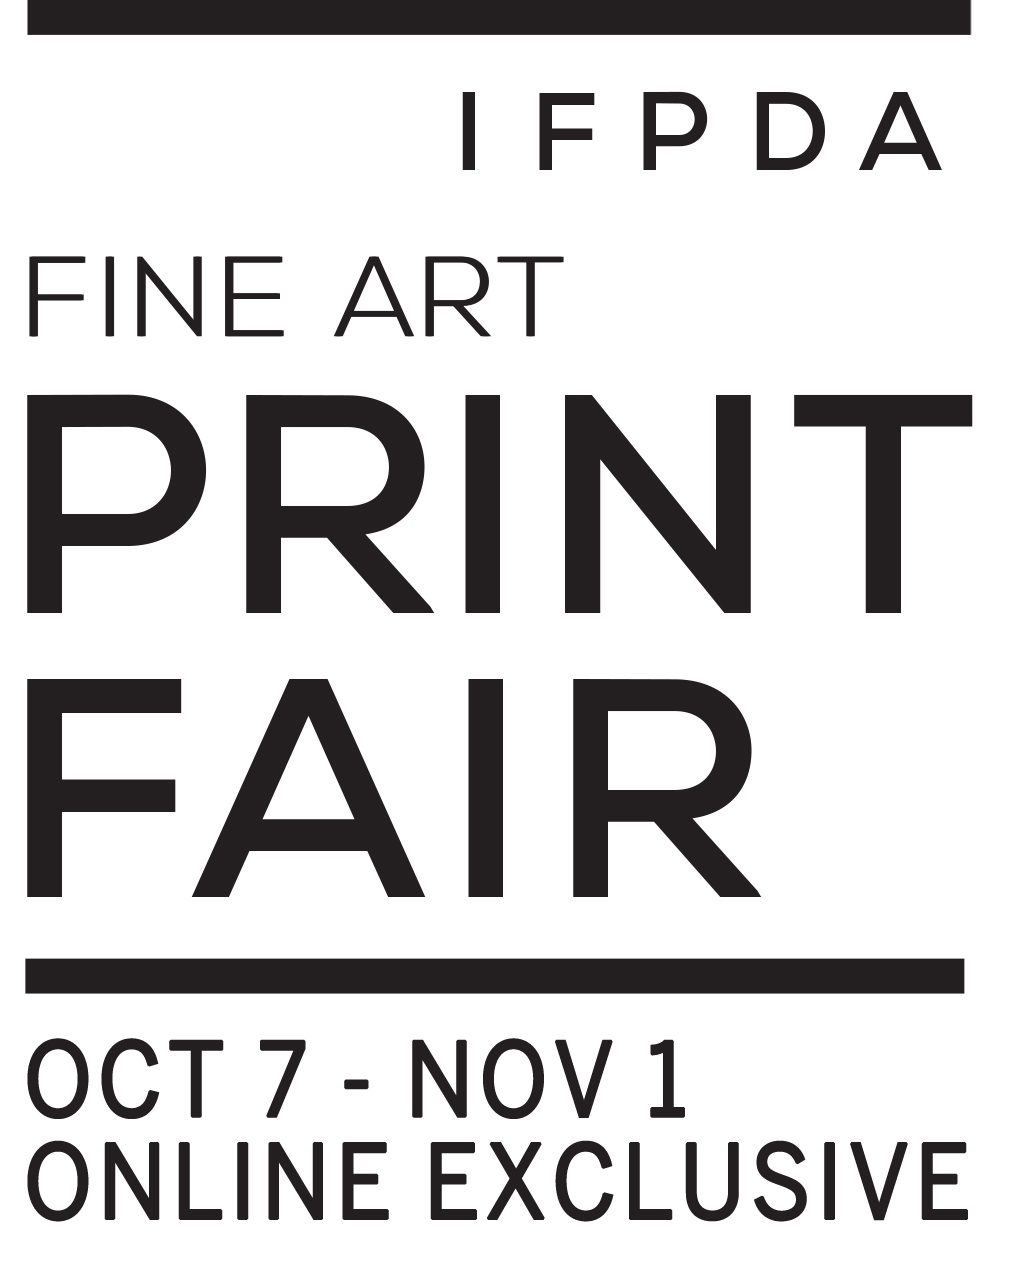 IFPDA Fine Art Print Fair 2020 October